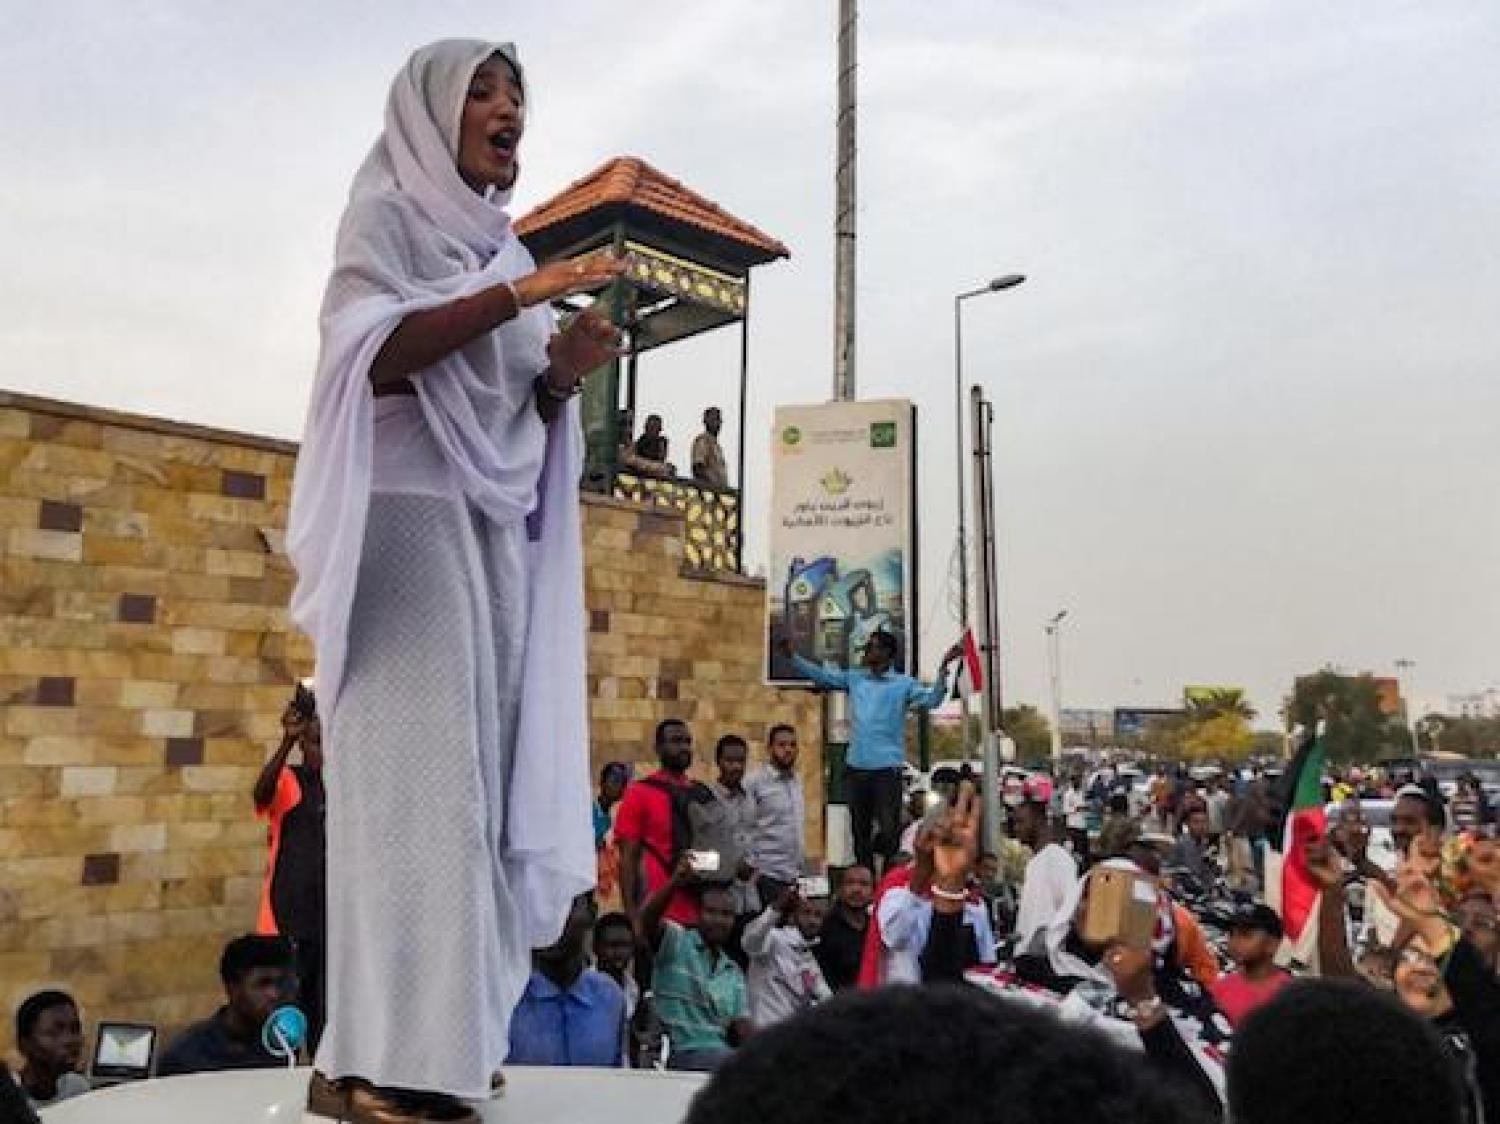 La svolta democratica del Sudan